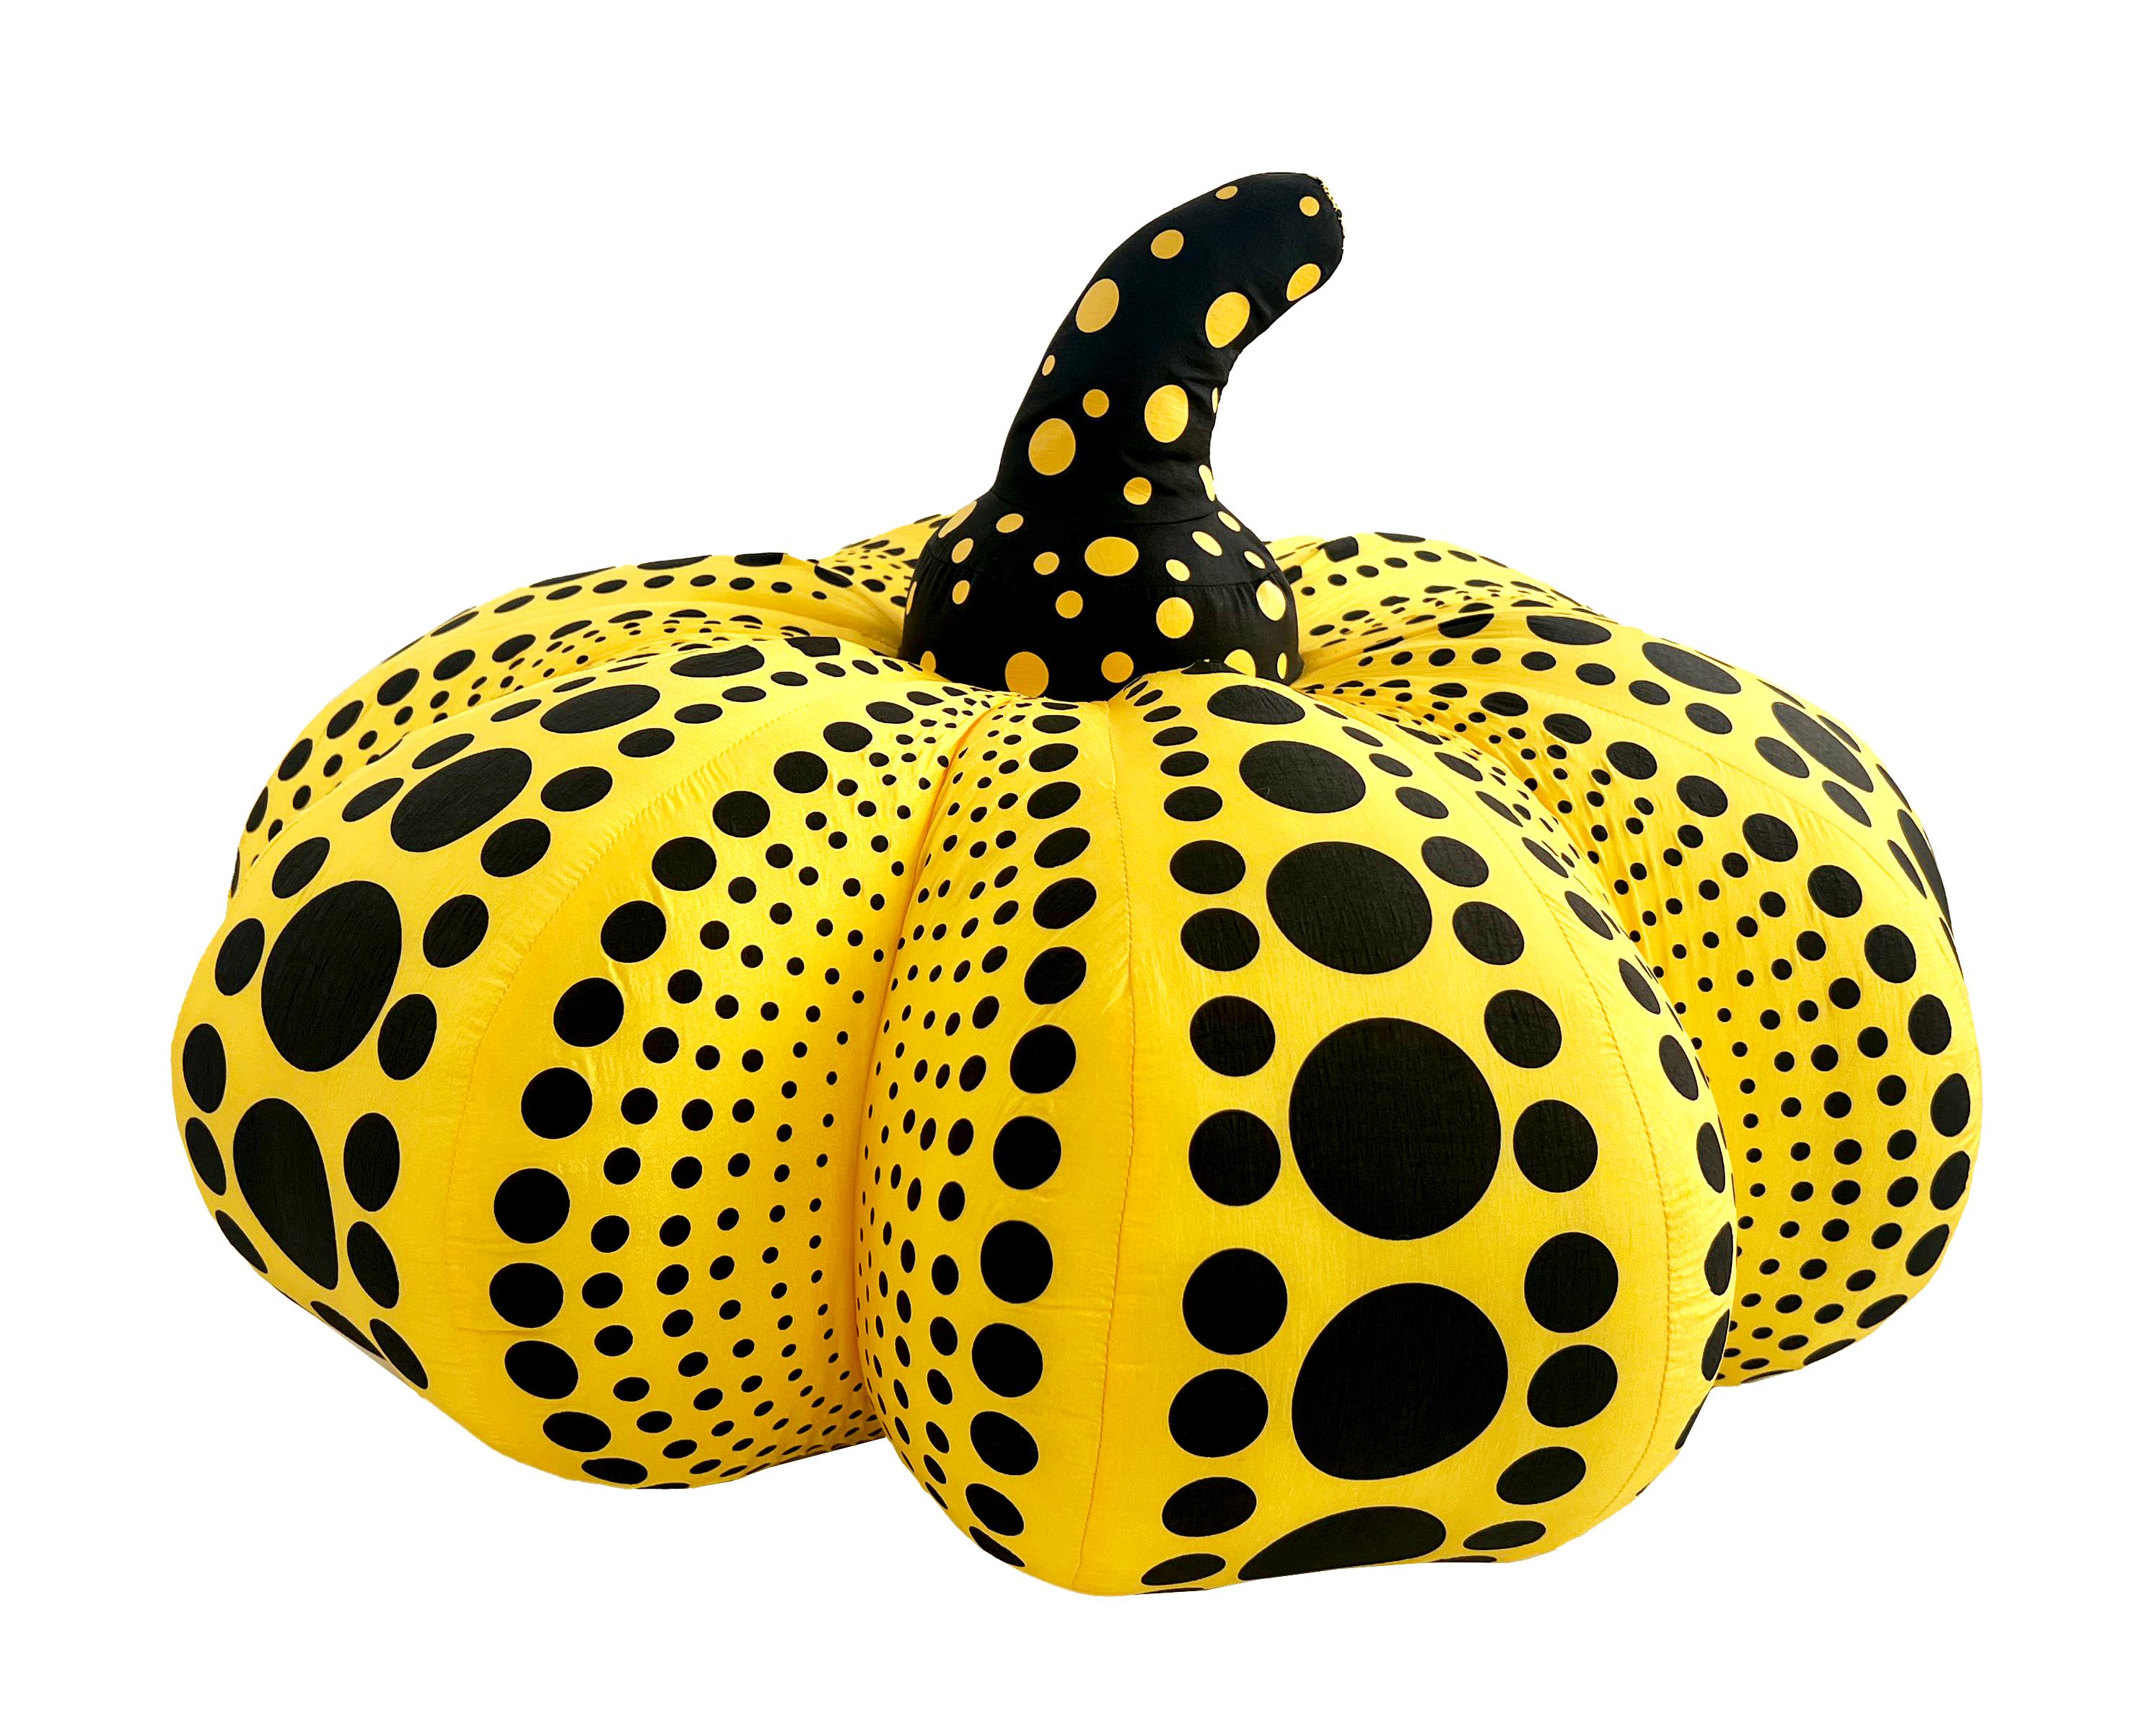 Kusama Pumpkin (Kusama yellow & black large plush pumpkin)